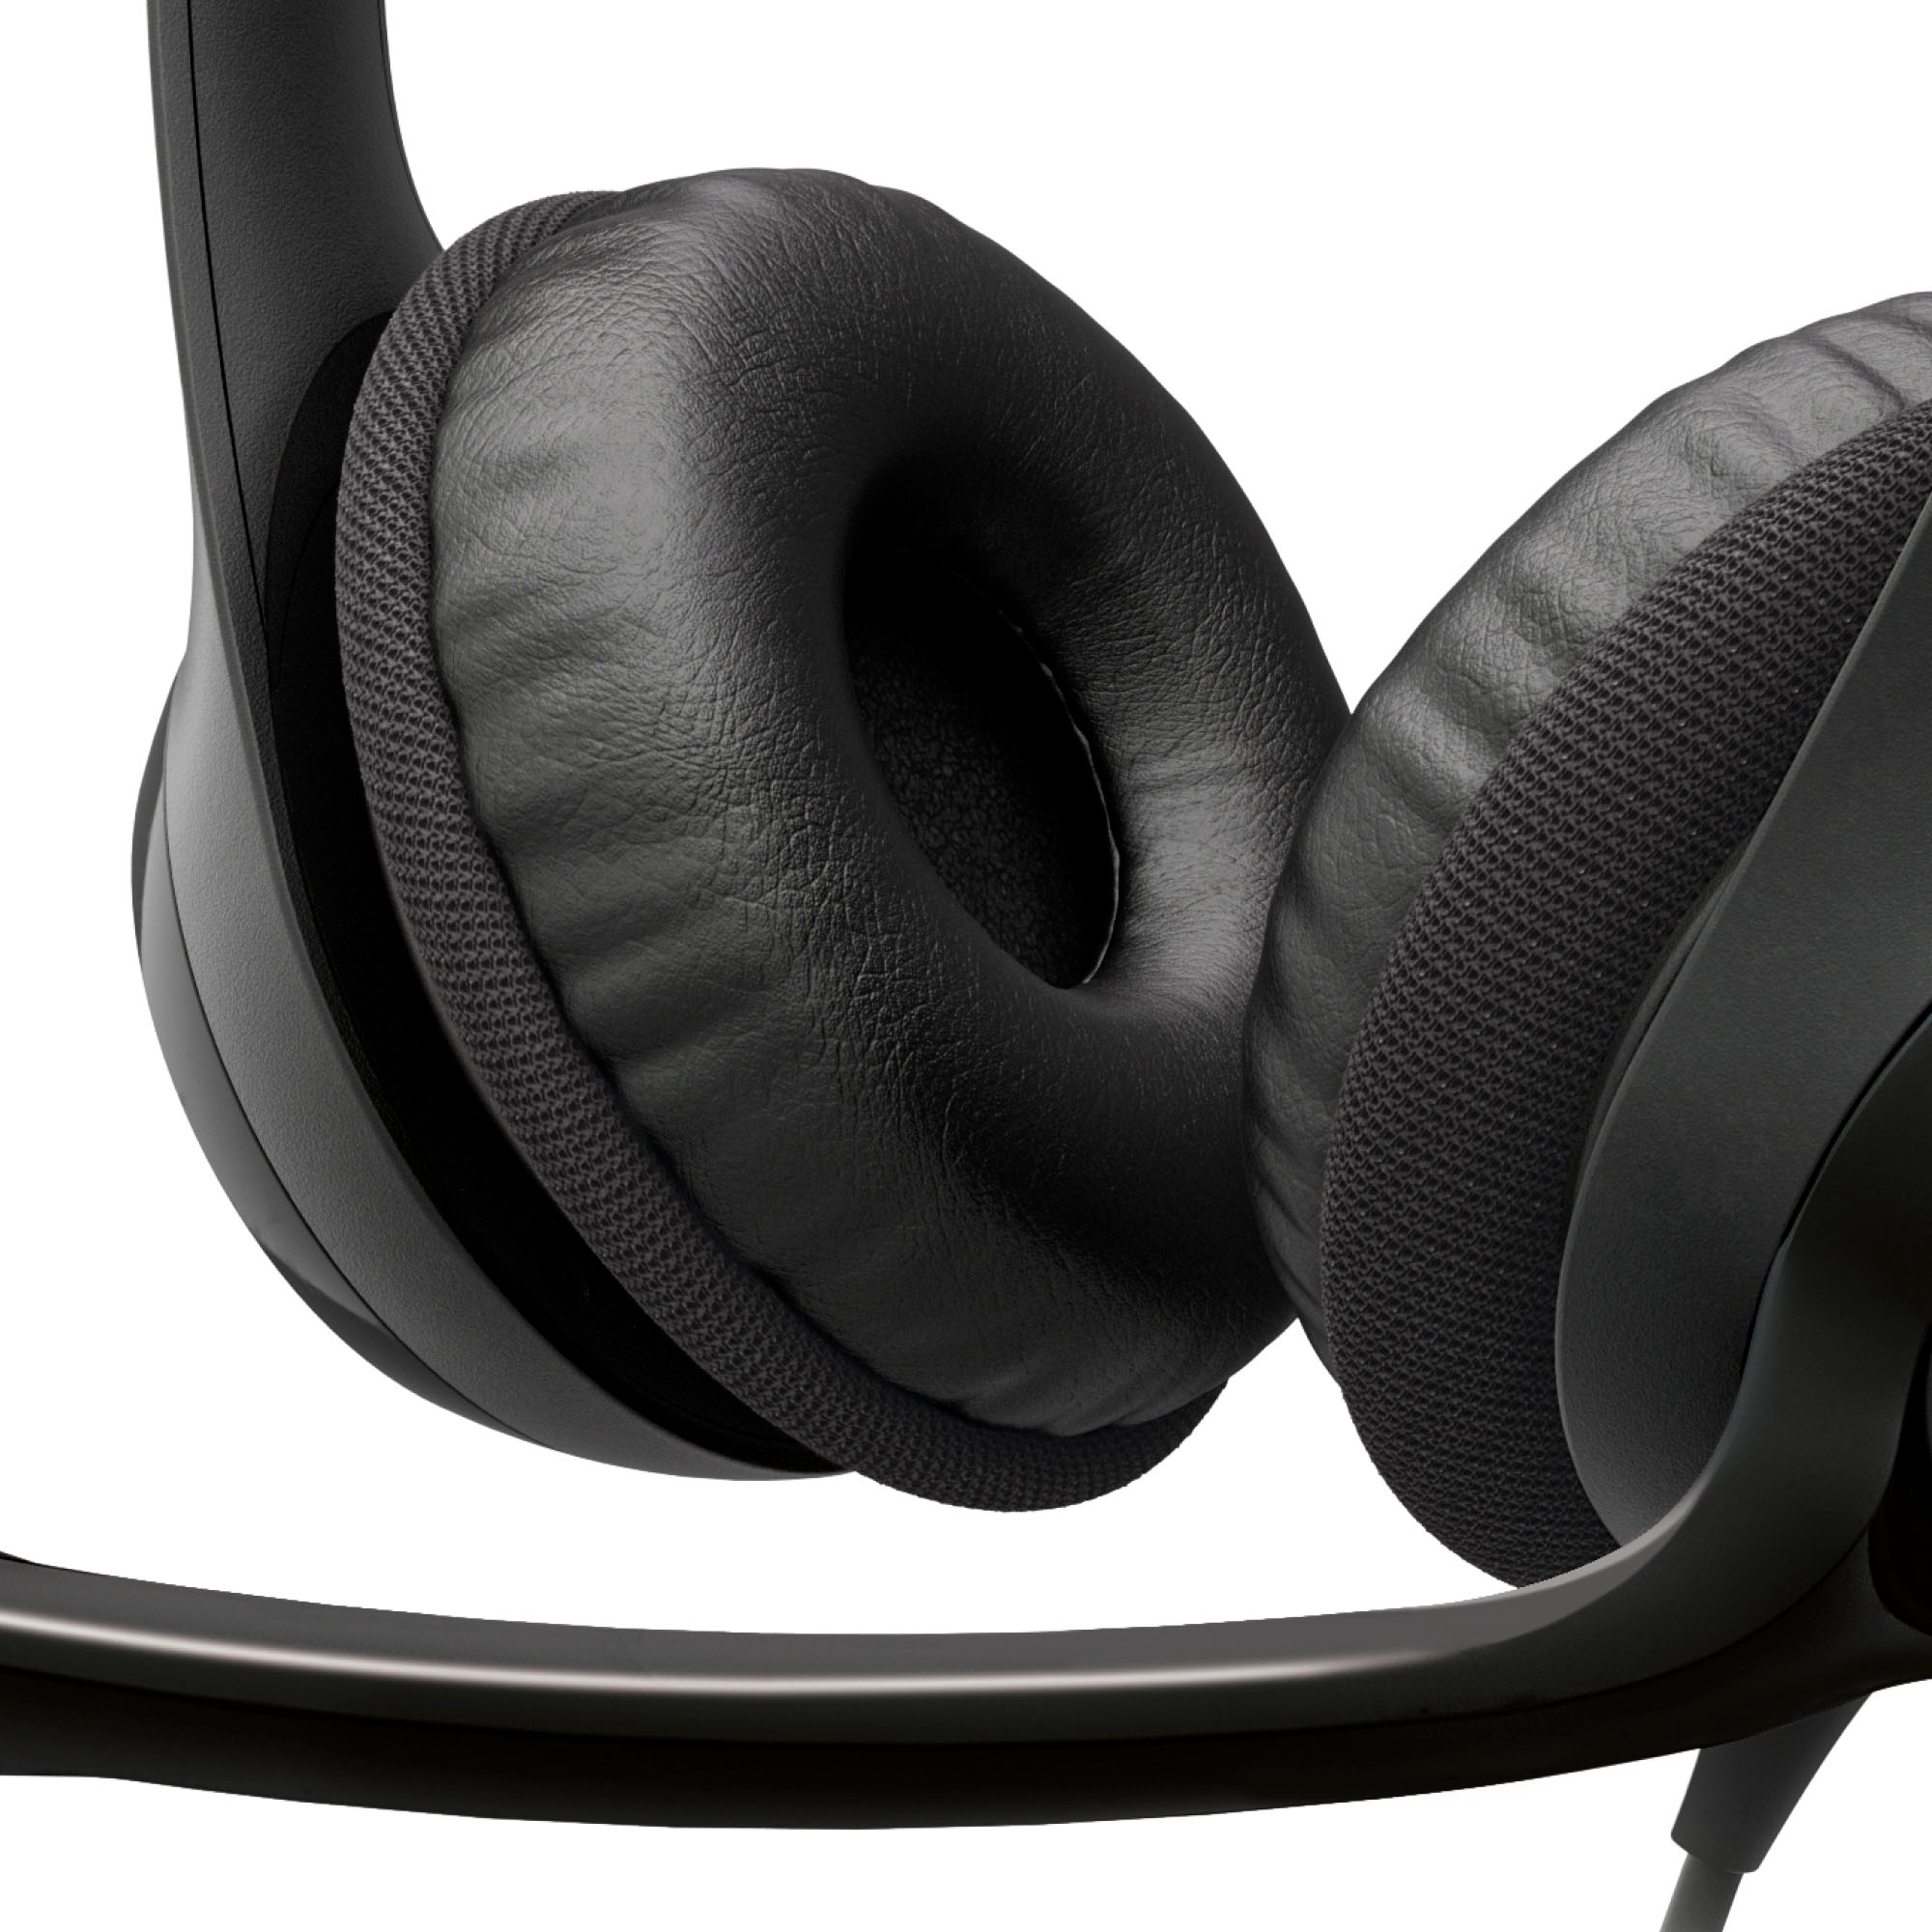 H390 Wired USB On-Ear Stereo Headphones Black 981-000014 - Best Buy